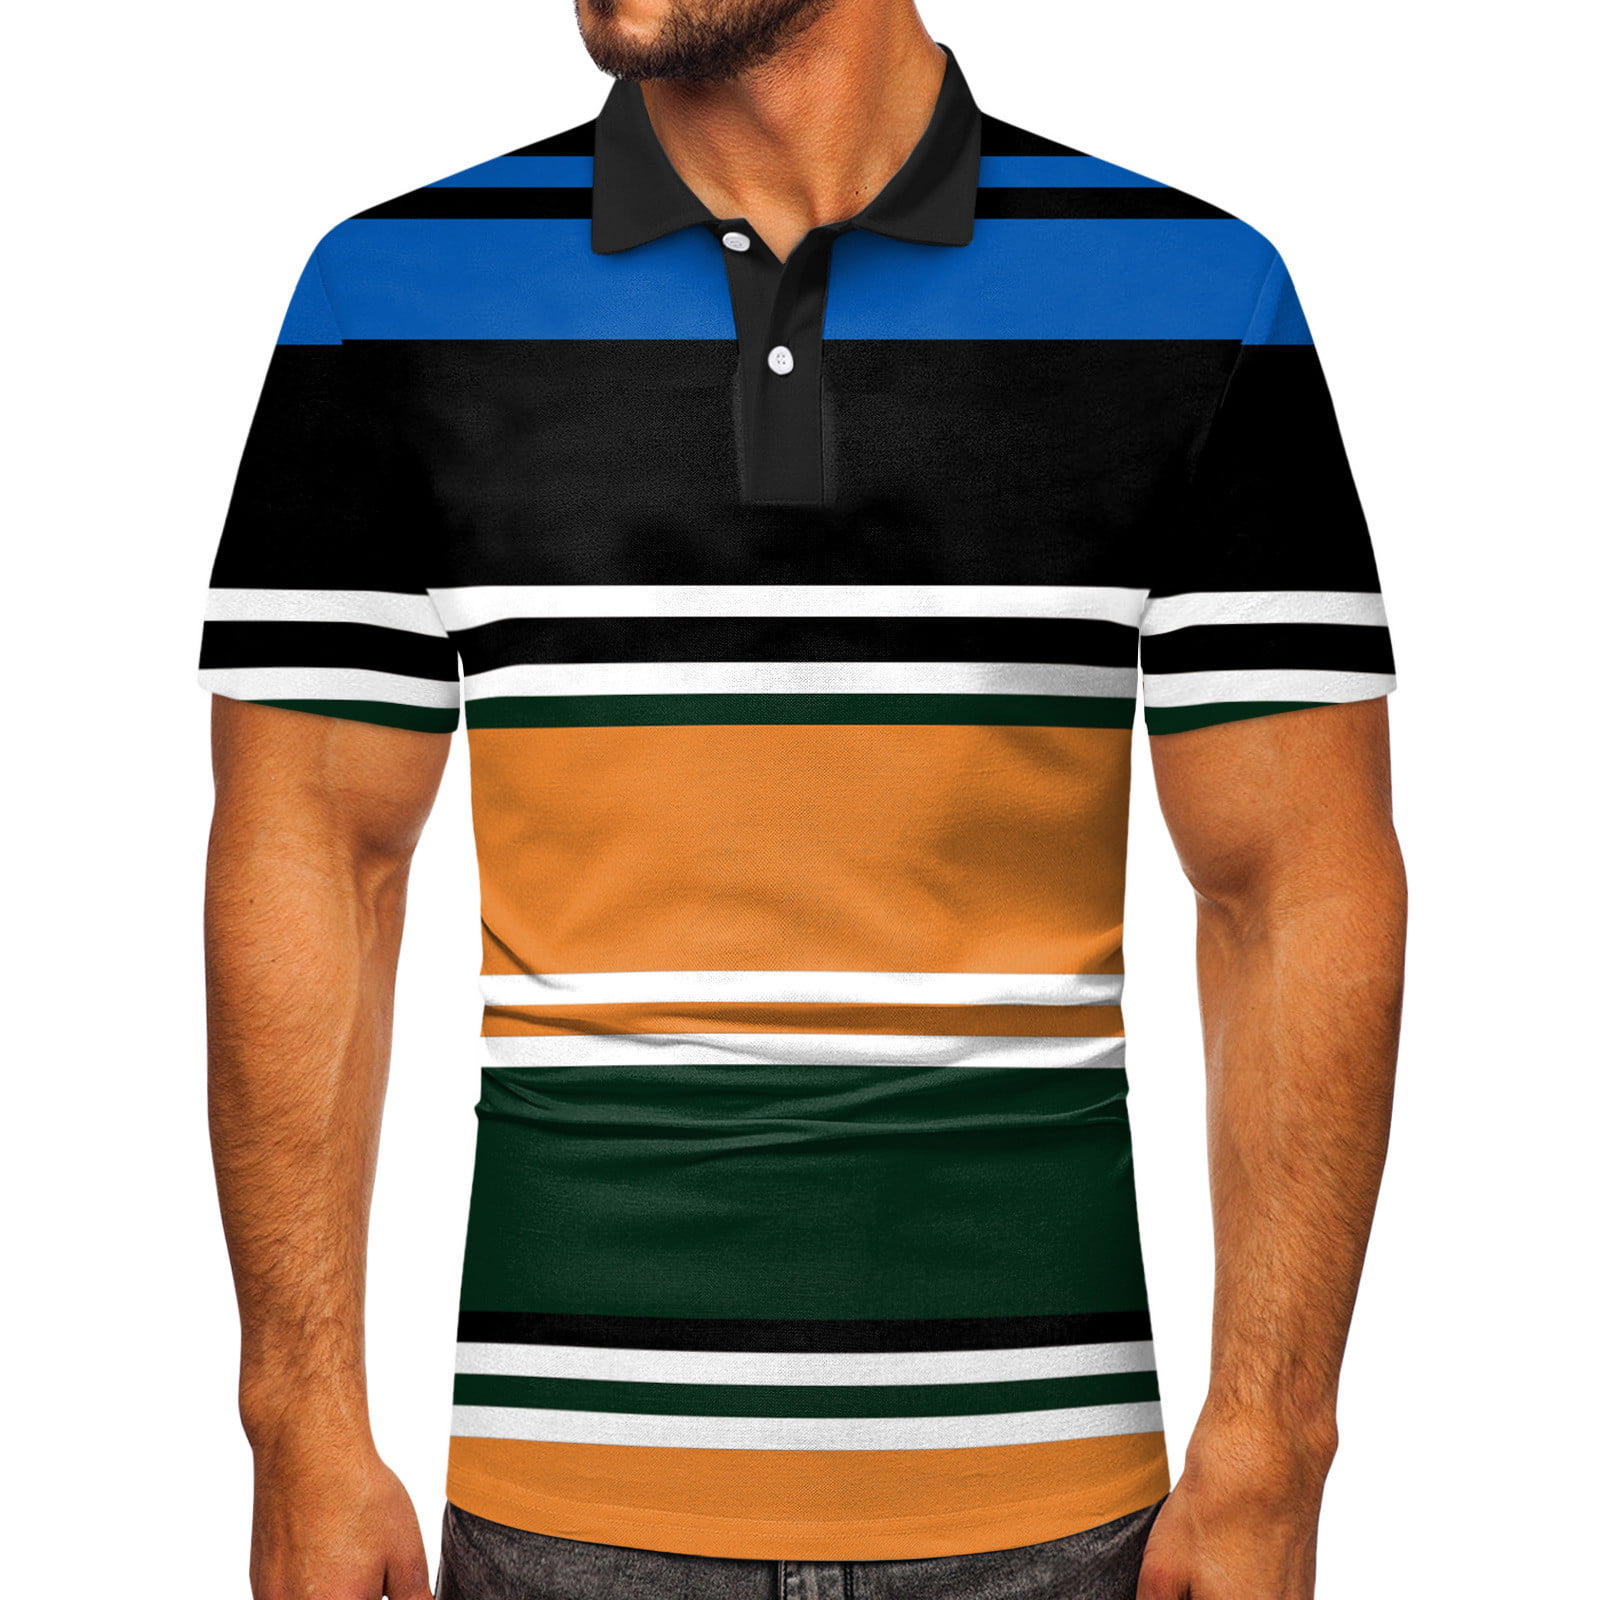 Quealent Polo Shirts For Men Men's Short Sleeve Shirt Cargo Tactical ...